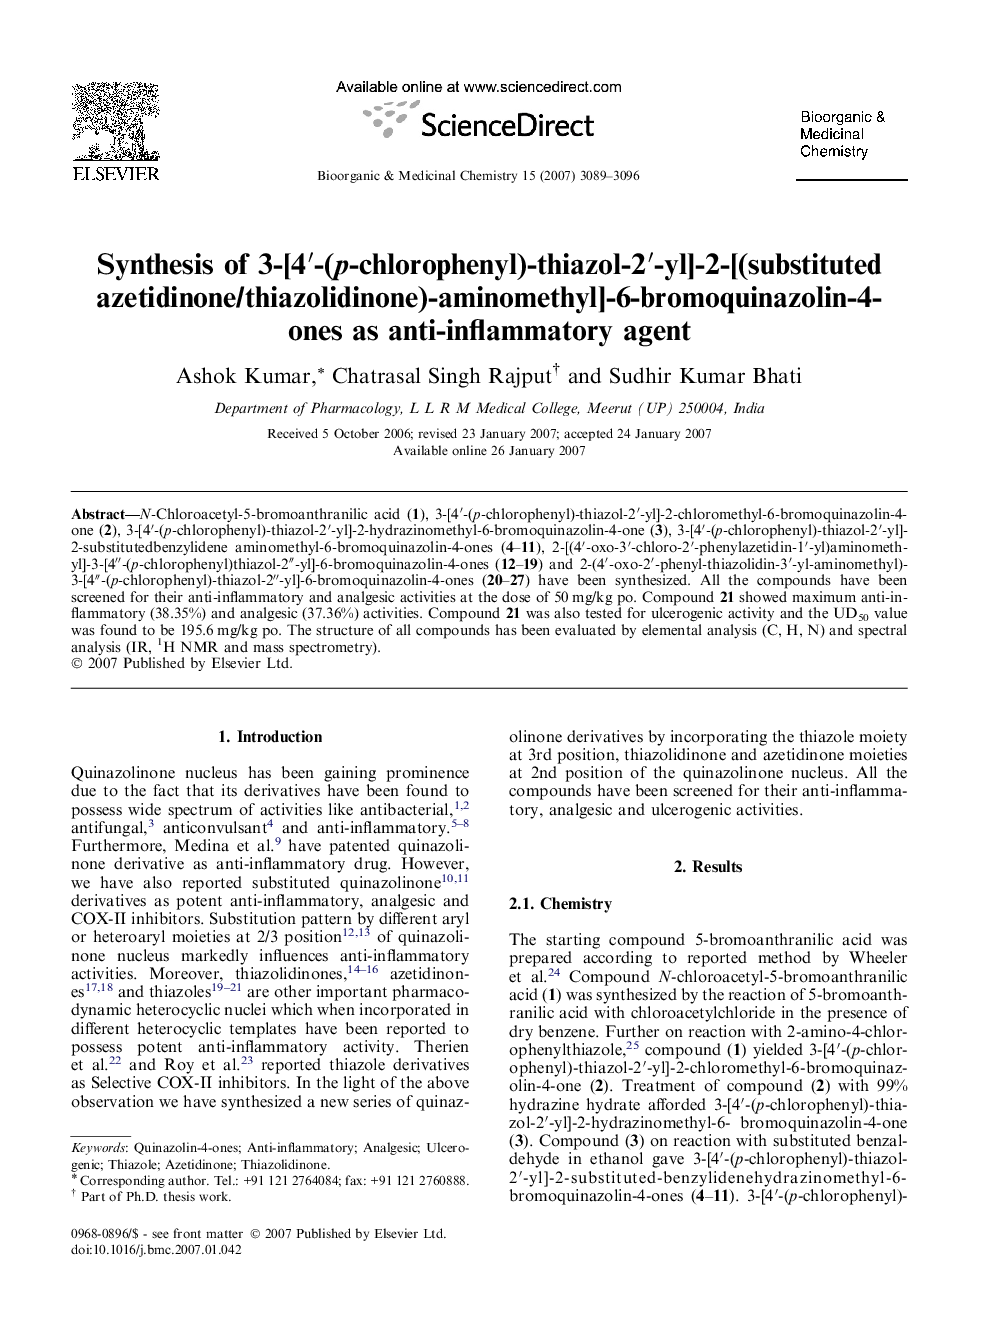 Synthesis of 3-[4′-(p-chlorophenyl)-thiazol-2′-yl]-2-[(substituted azetidinone/thiazolidinone)-aminomethyl]-6-bromoquinazolin-4-ones as anti-inflammatory agent